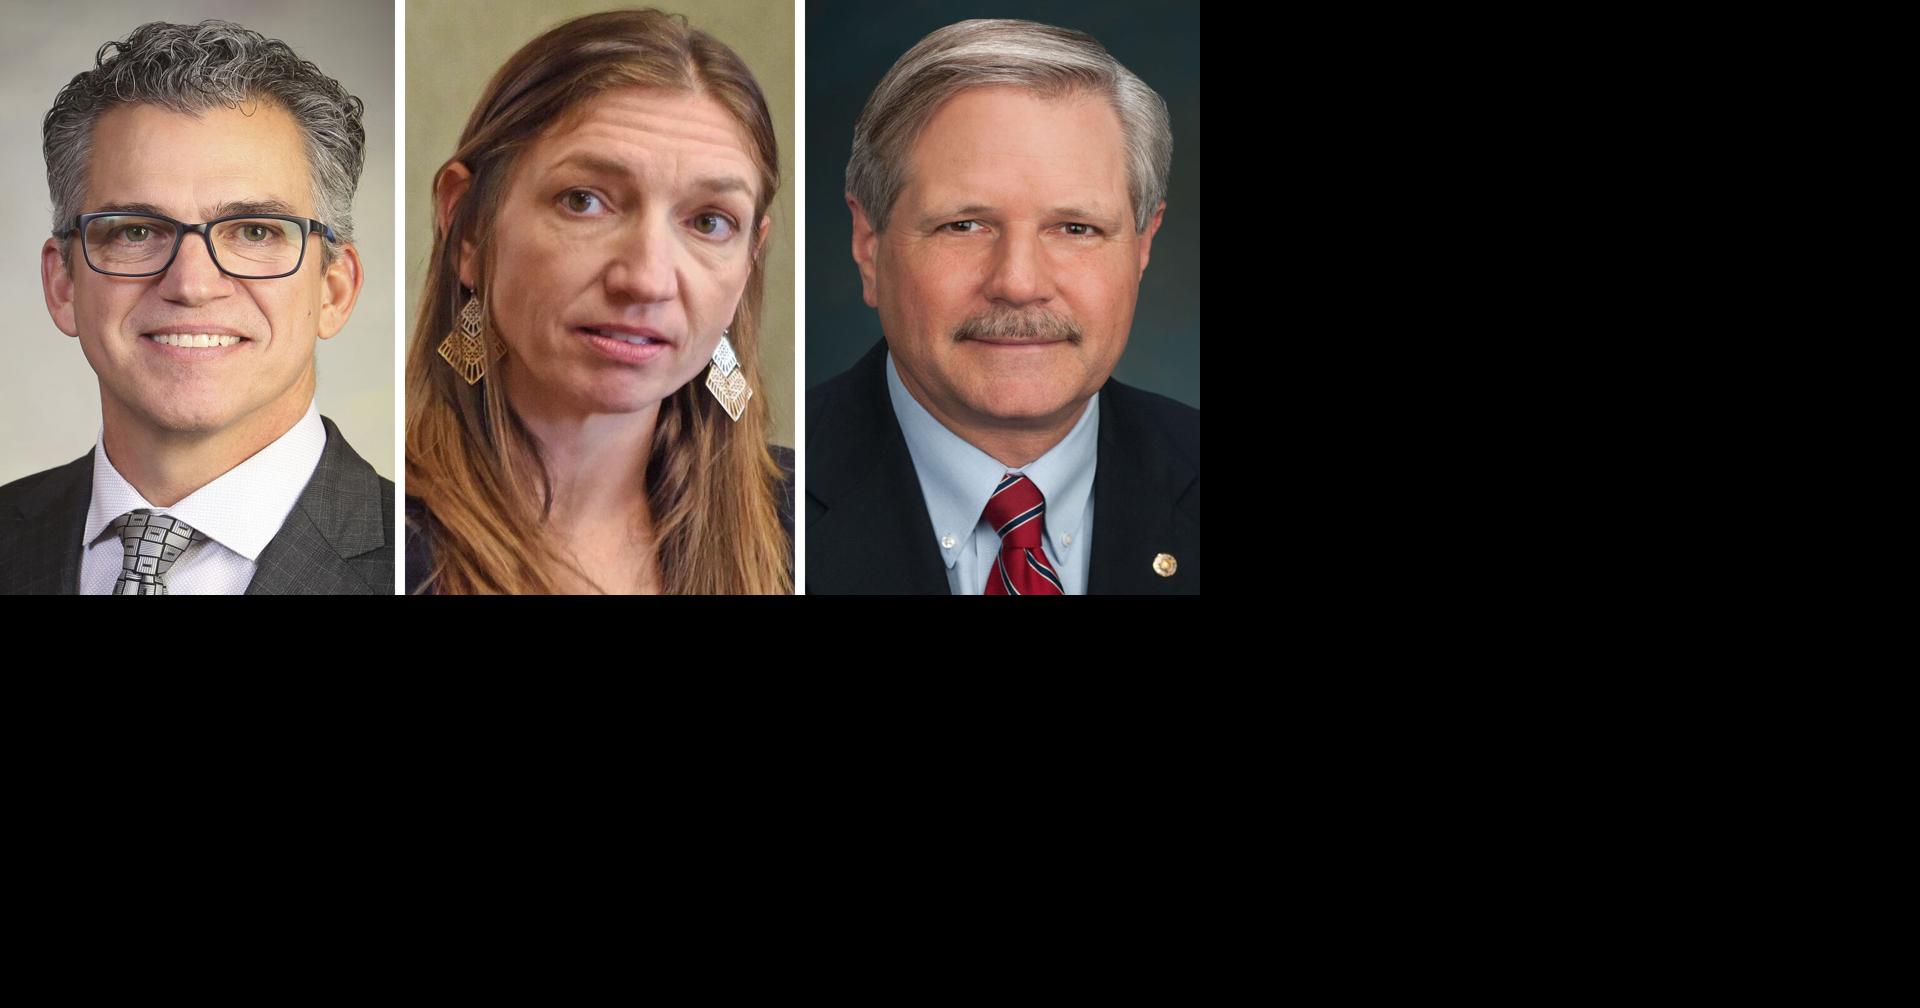 North Dakota U.S. Senate debate fiery between Hoeven, challengers